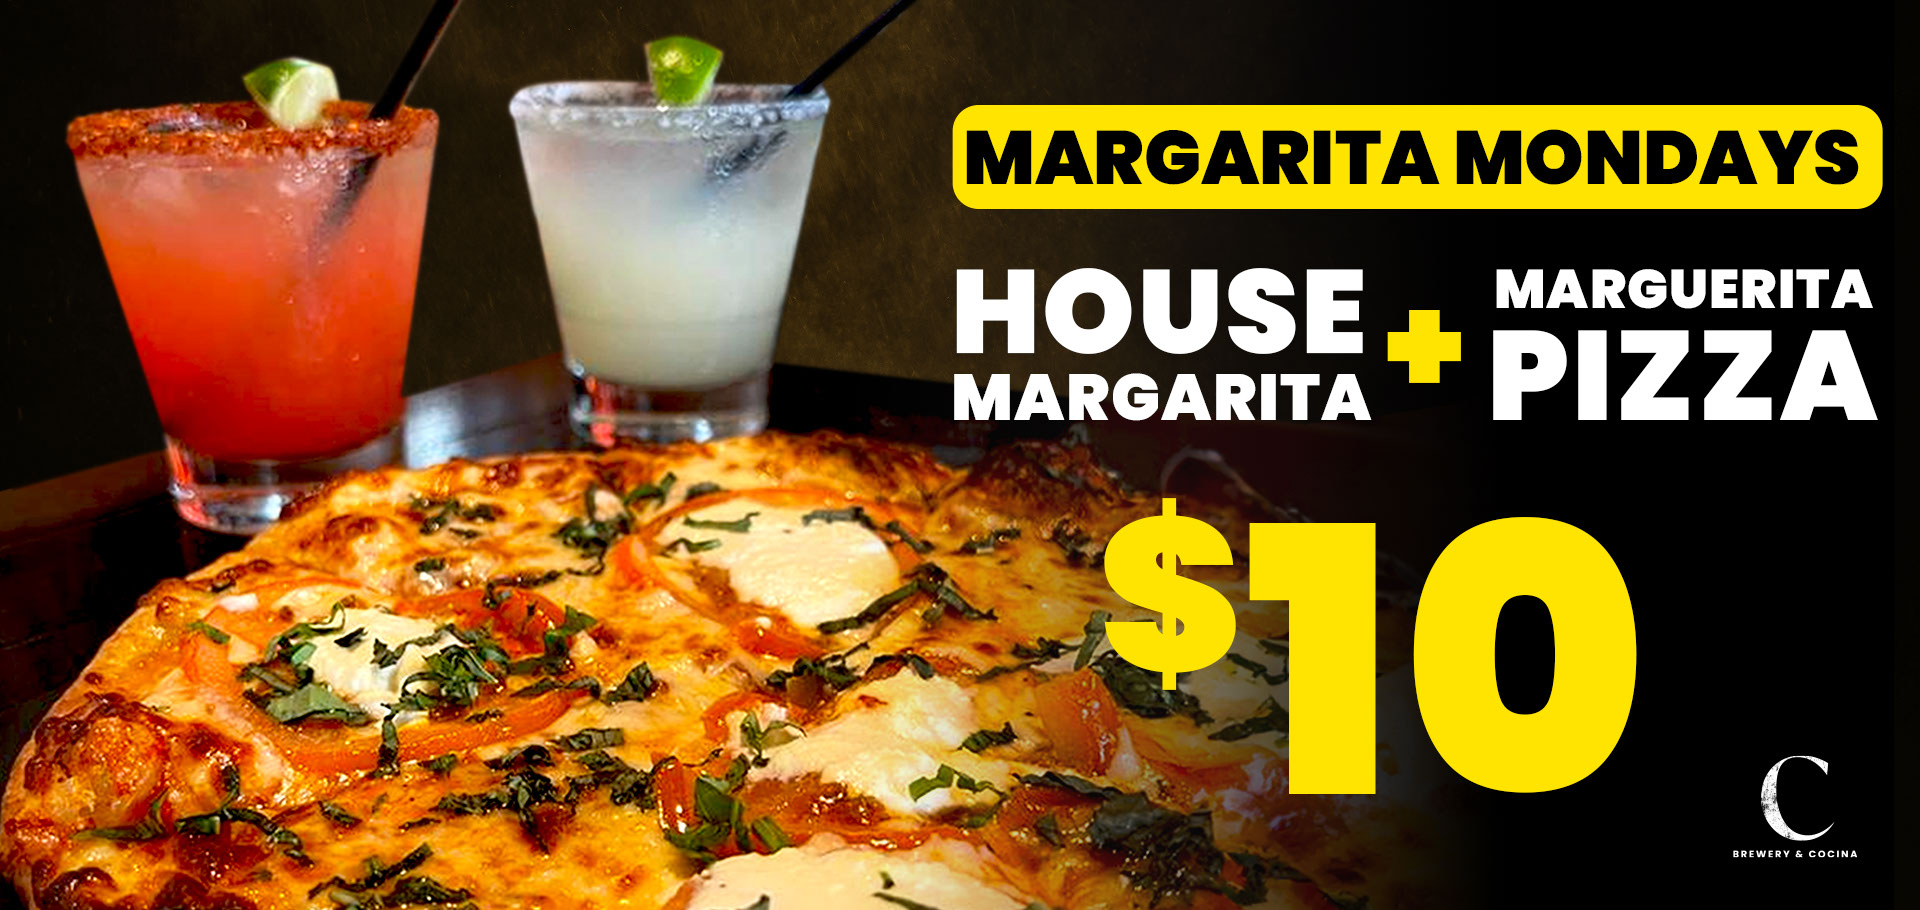 Margarita Monday's - House Margarita + Marguerita Pizza - $10